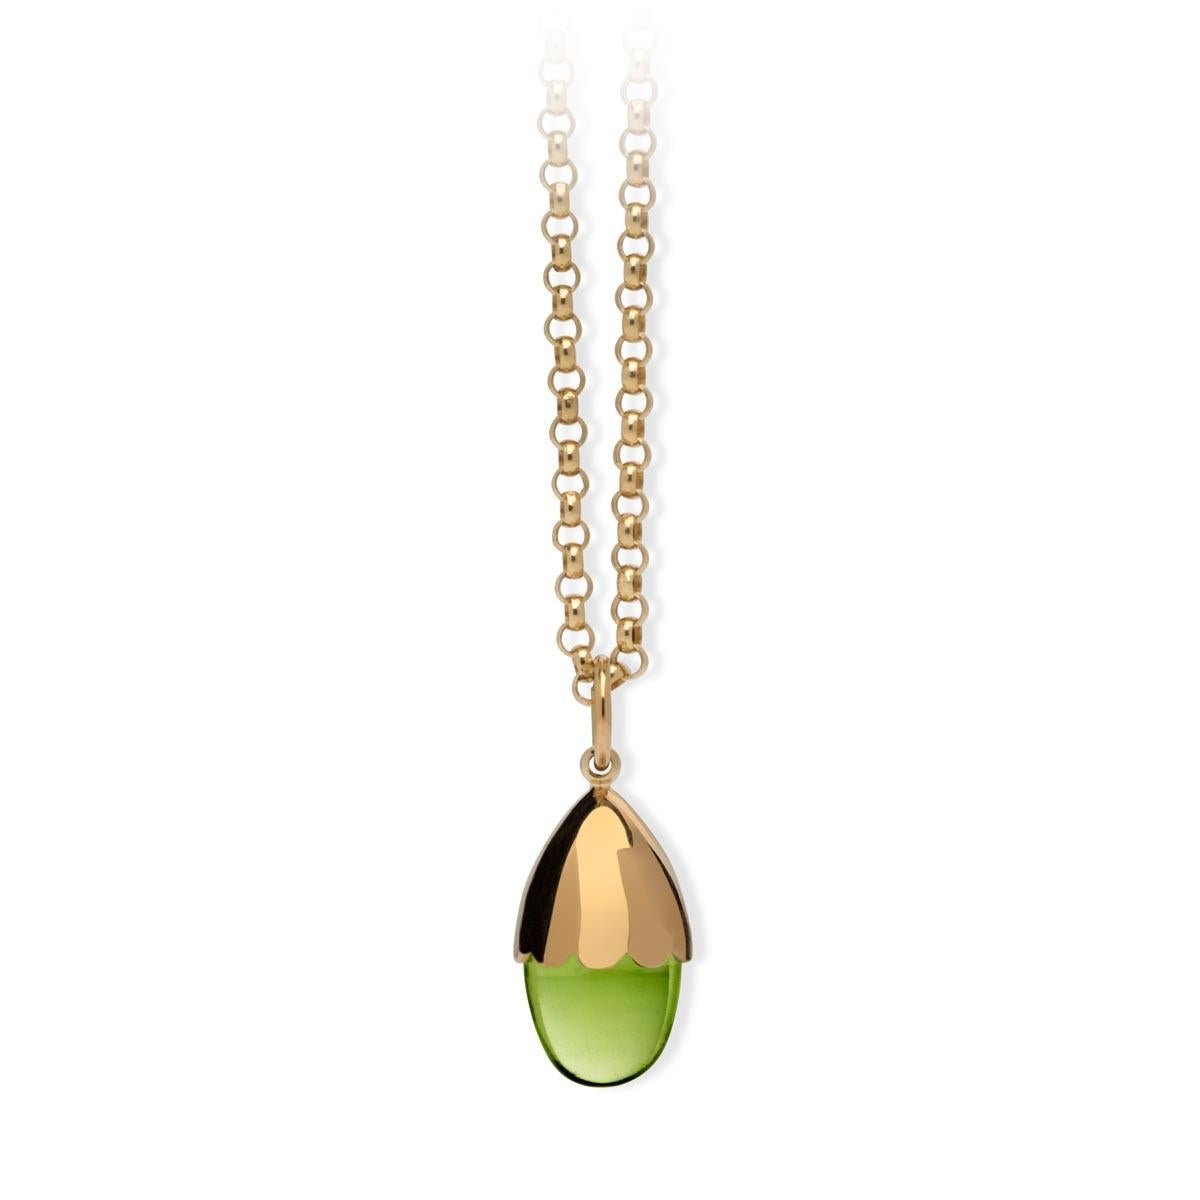 MAVIADA's Comino Green Peridot Quartz 18 karat Yellow Gold Pendant necklace  7